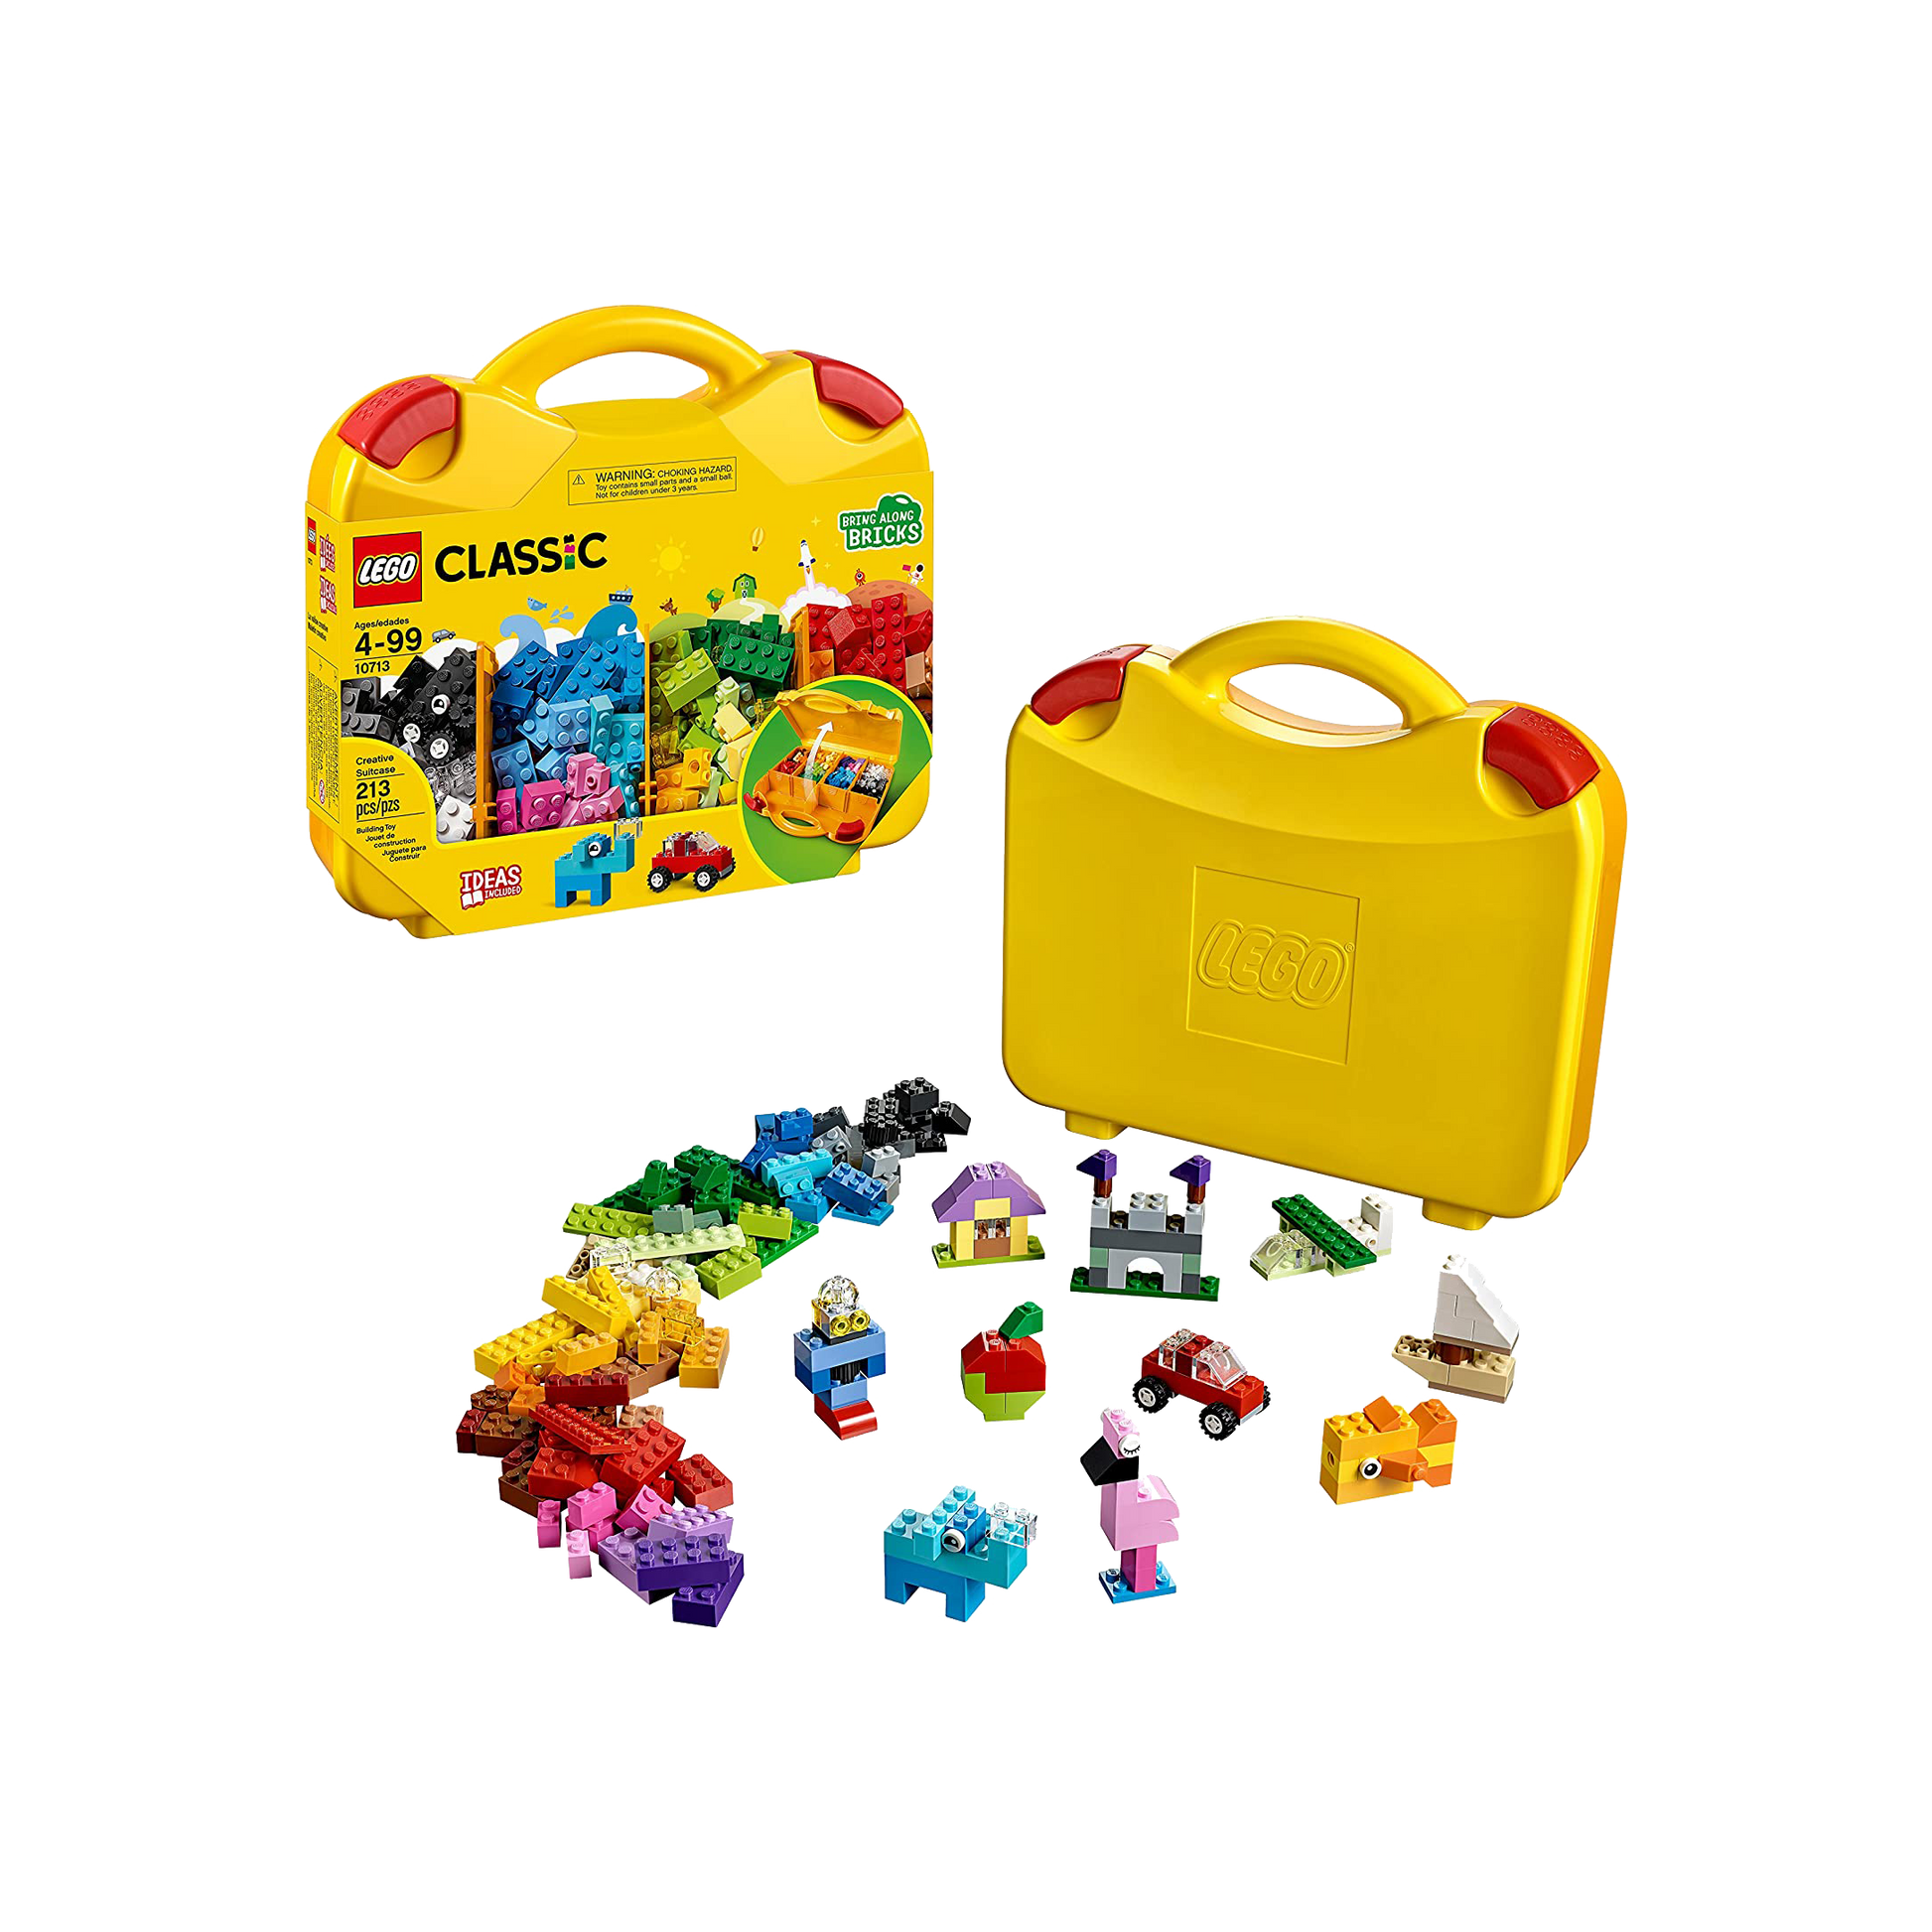 LEGO Creative Suitcase Building Kit (213 Pieces)